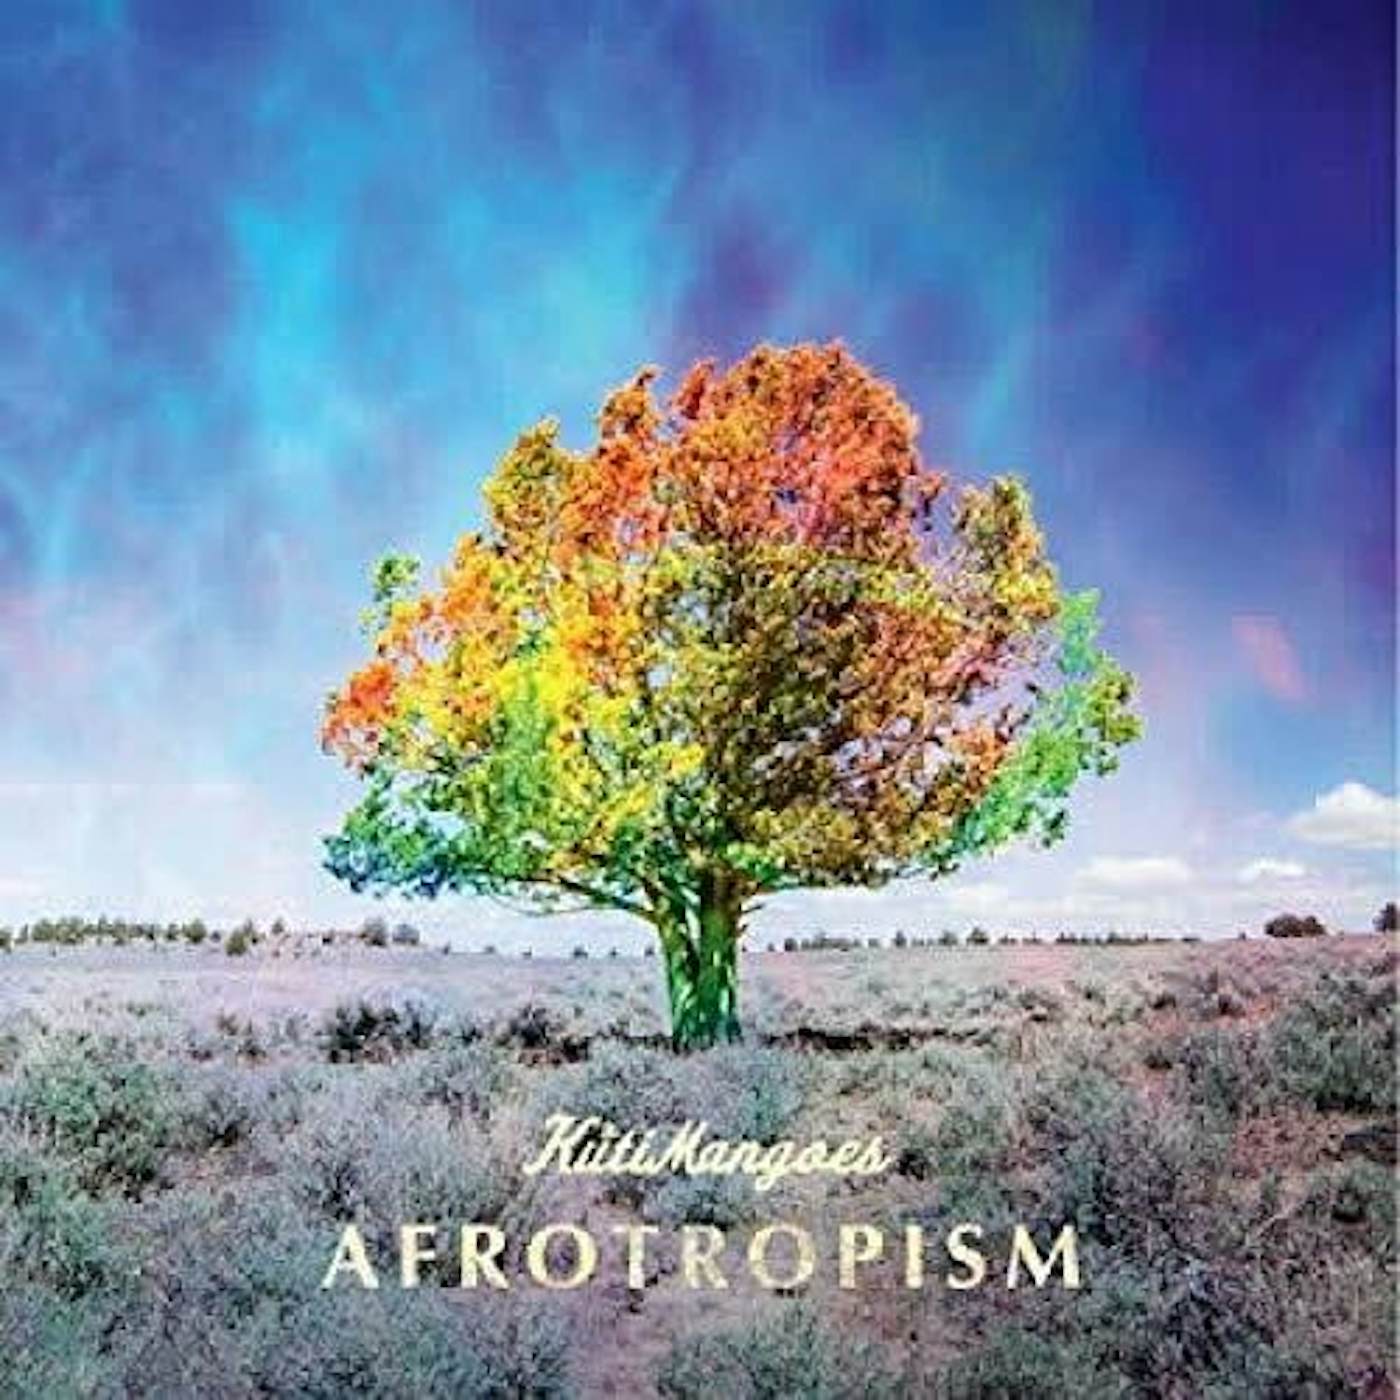 The KutiMangoes AFROTROPISM CD